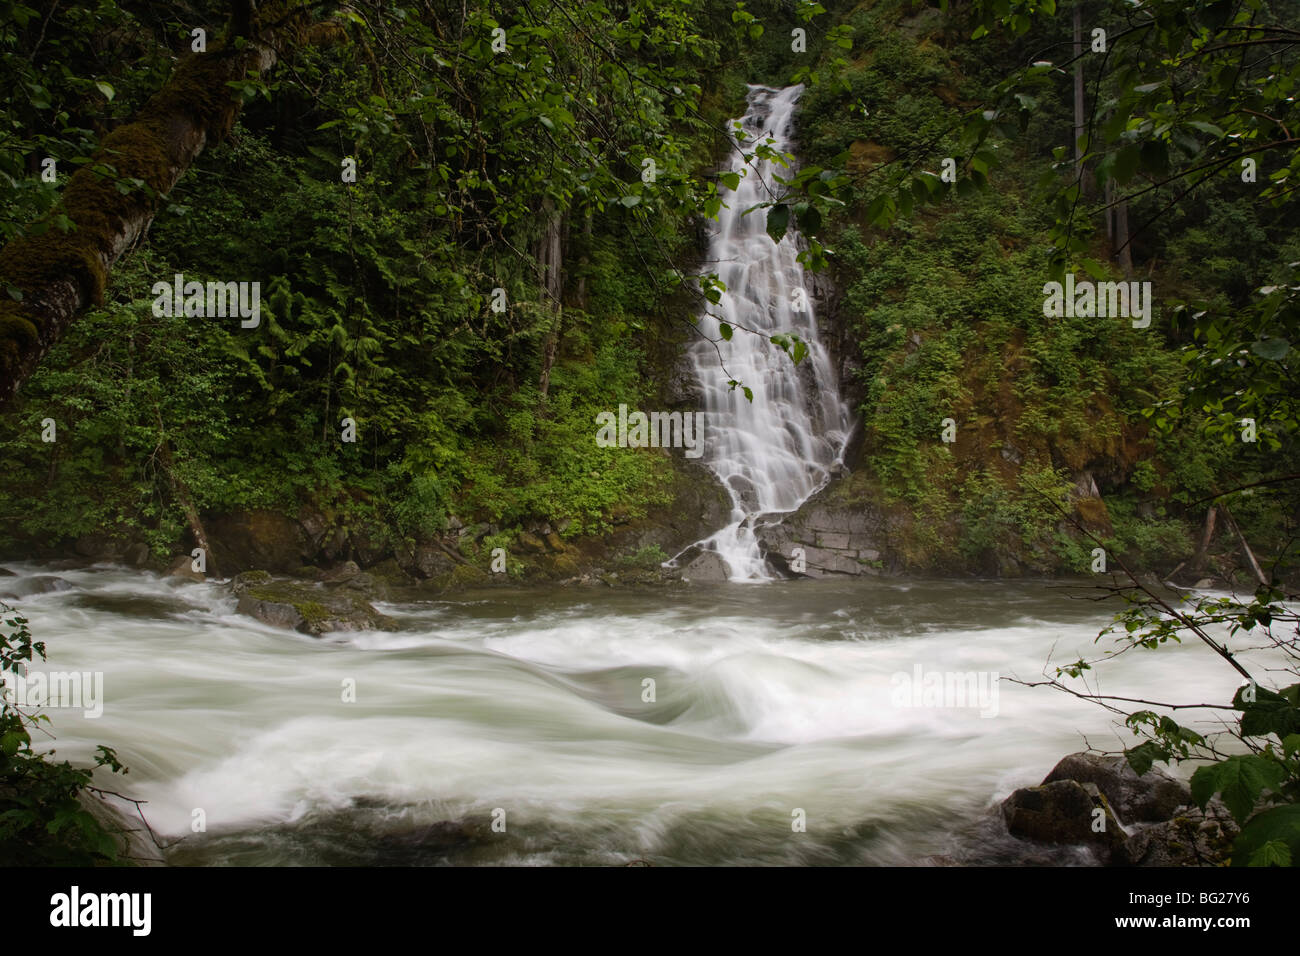 Eureka Falls cascades into the rushing waters of Silverhope Creek, British Columbia, Canada Stock Photo